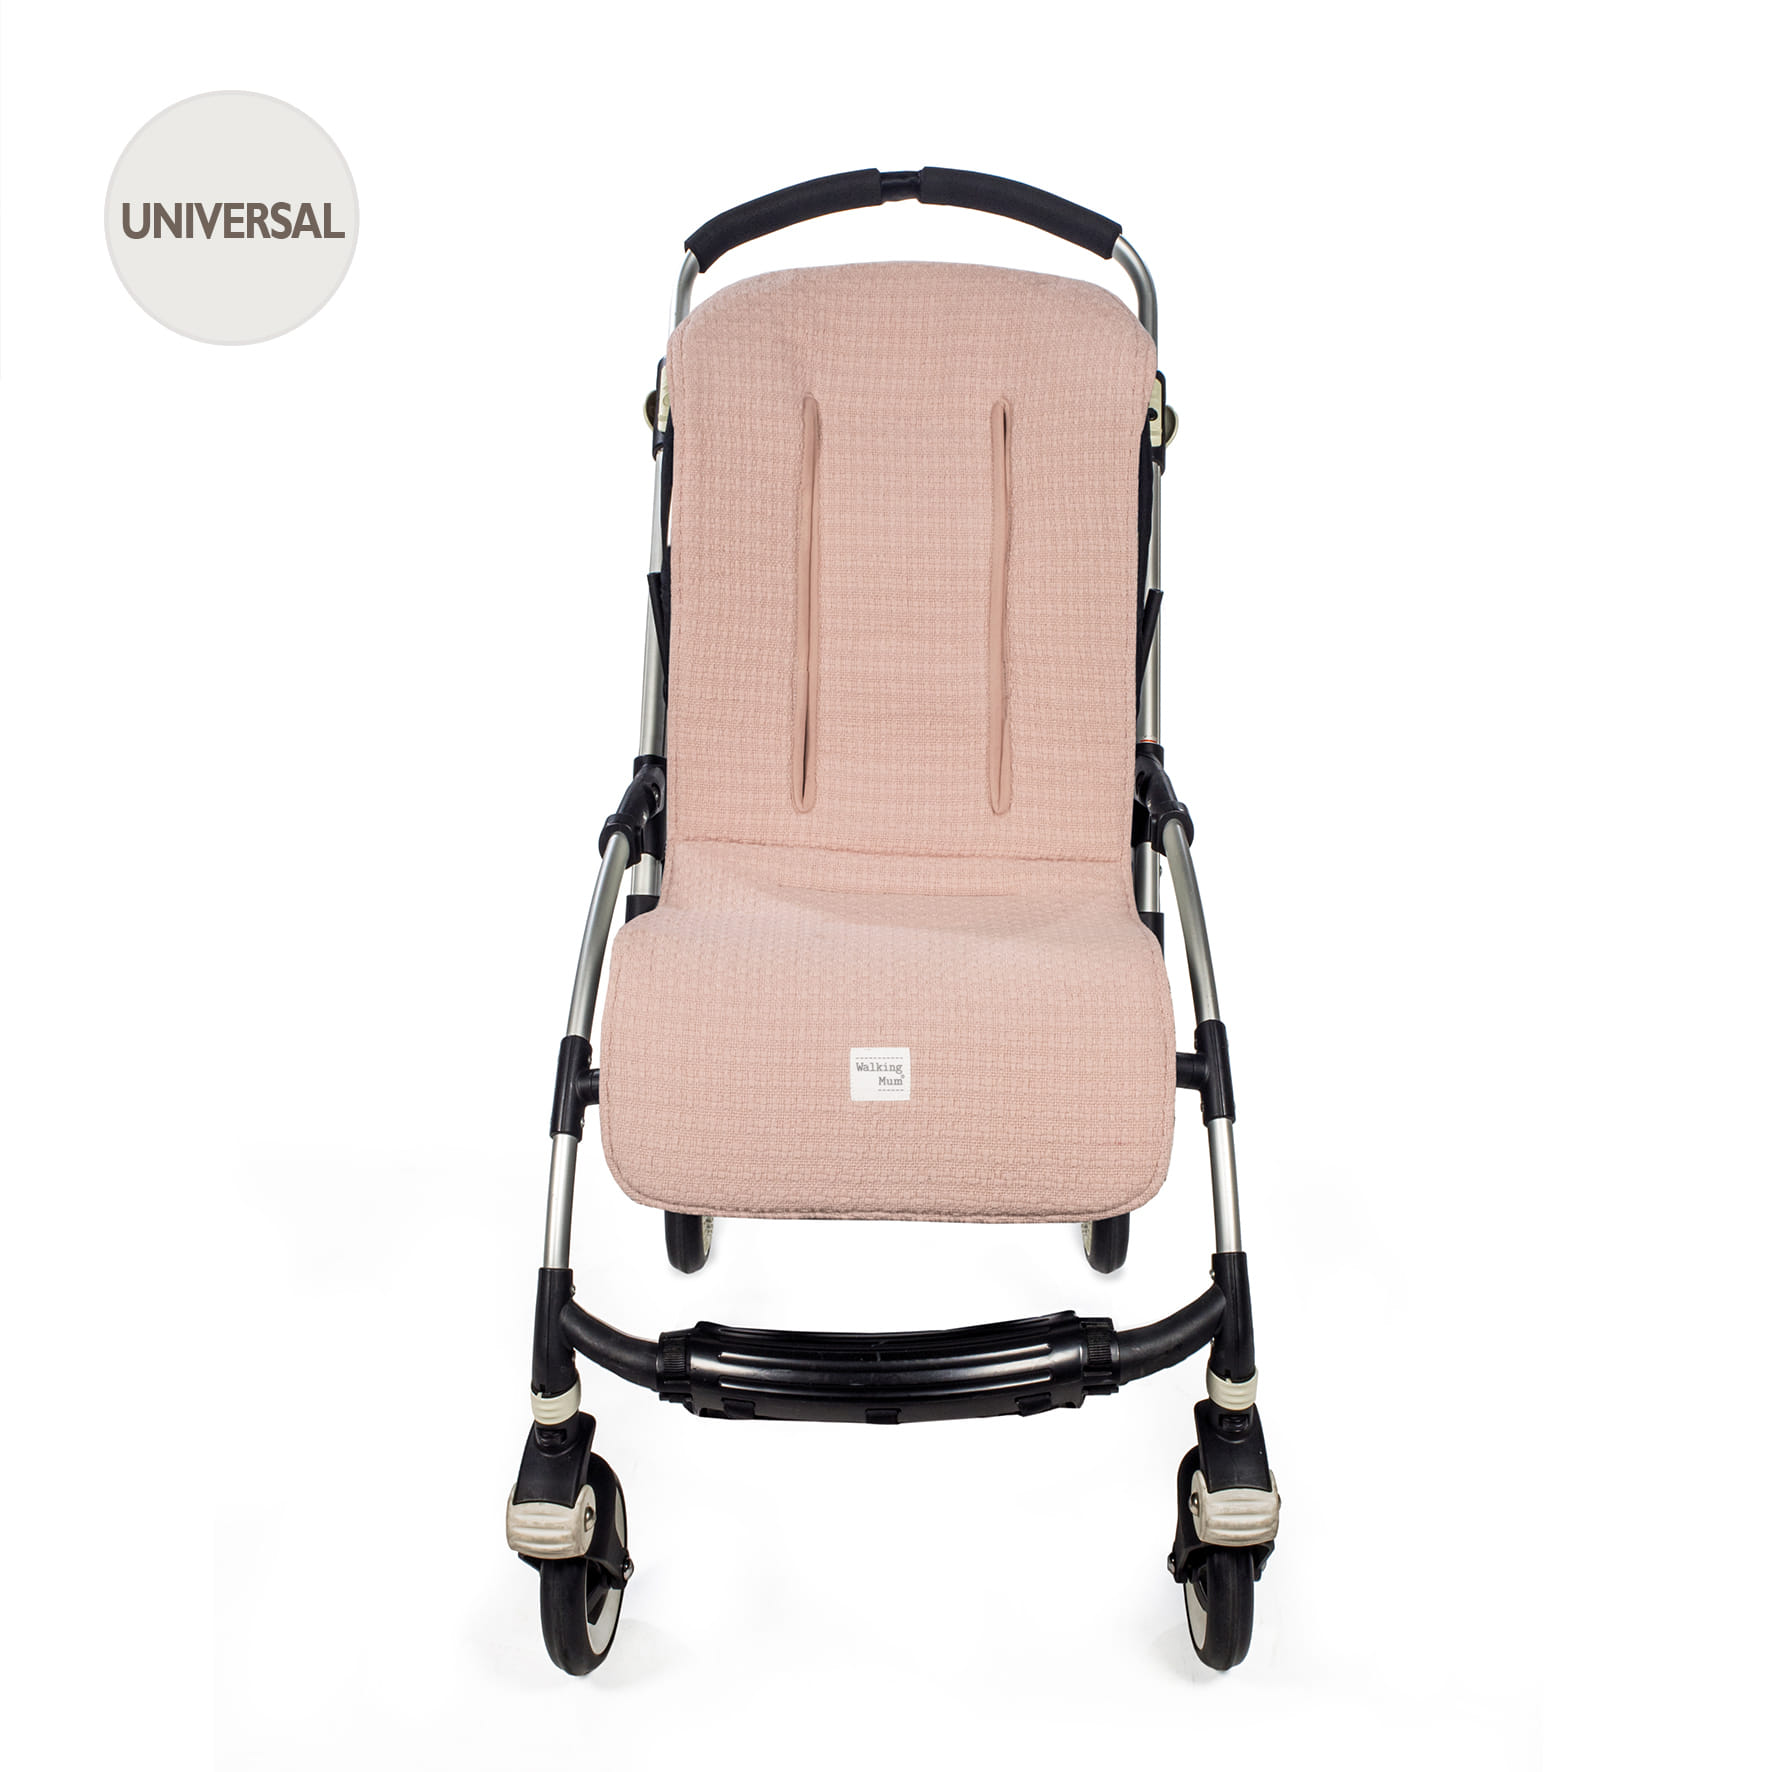 Colchoneta universal para silla de paseo verano Café au lait rosa